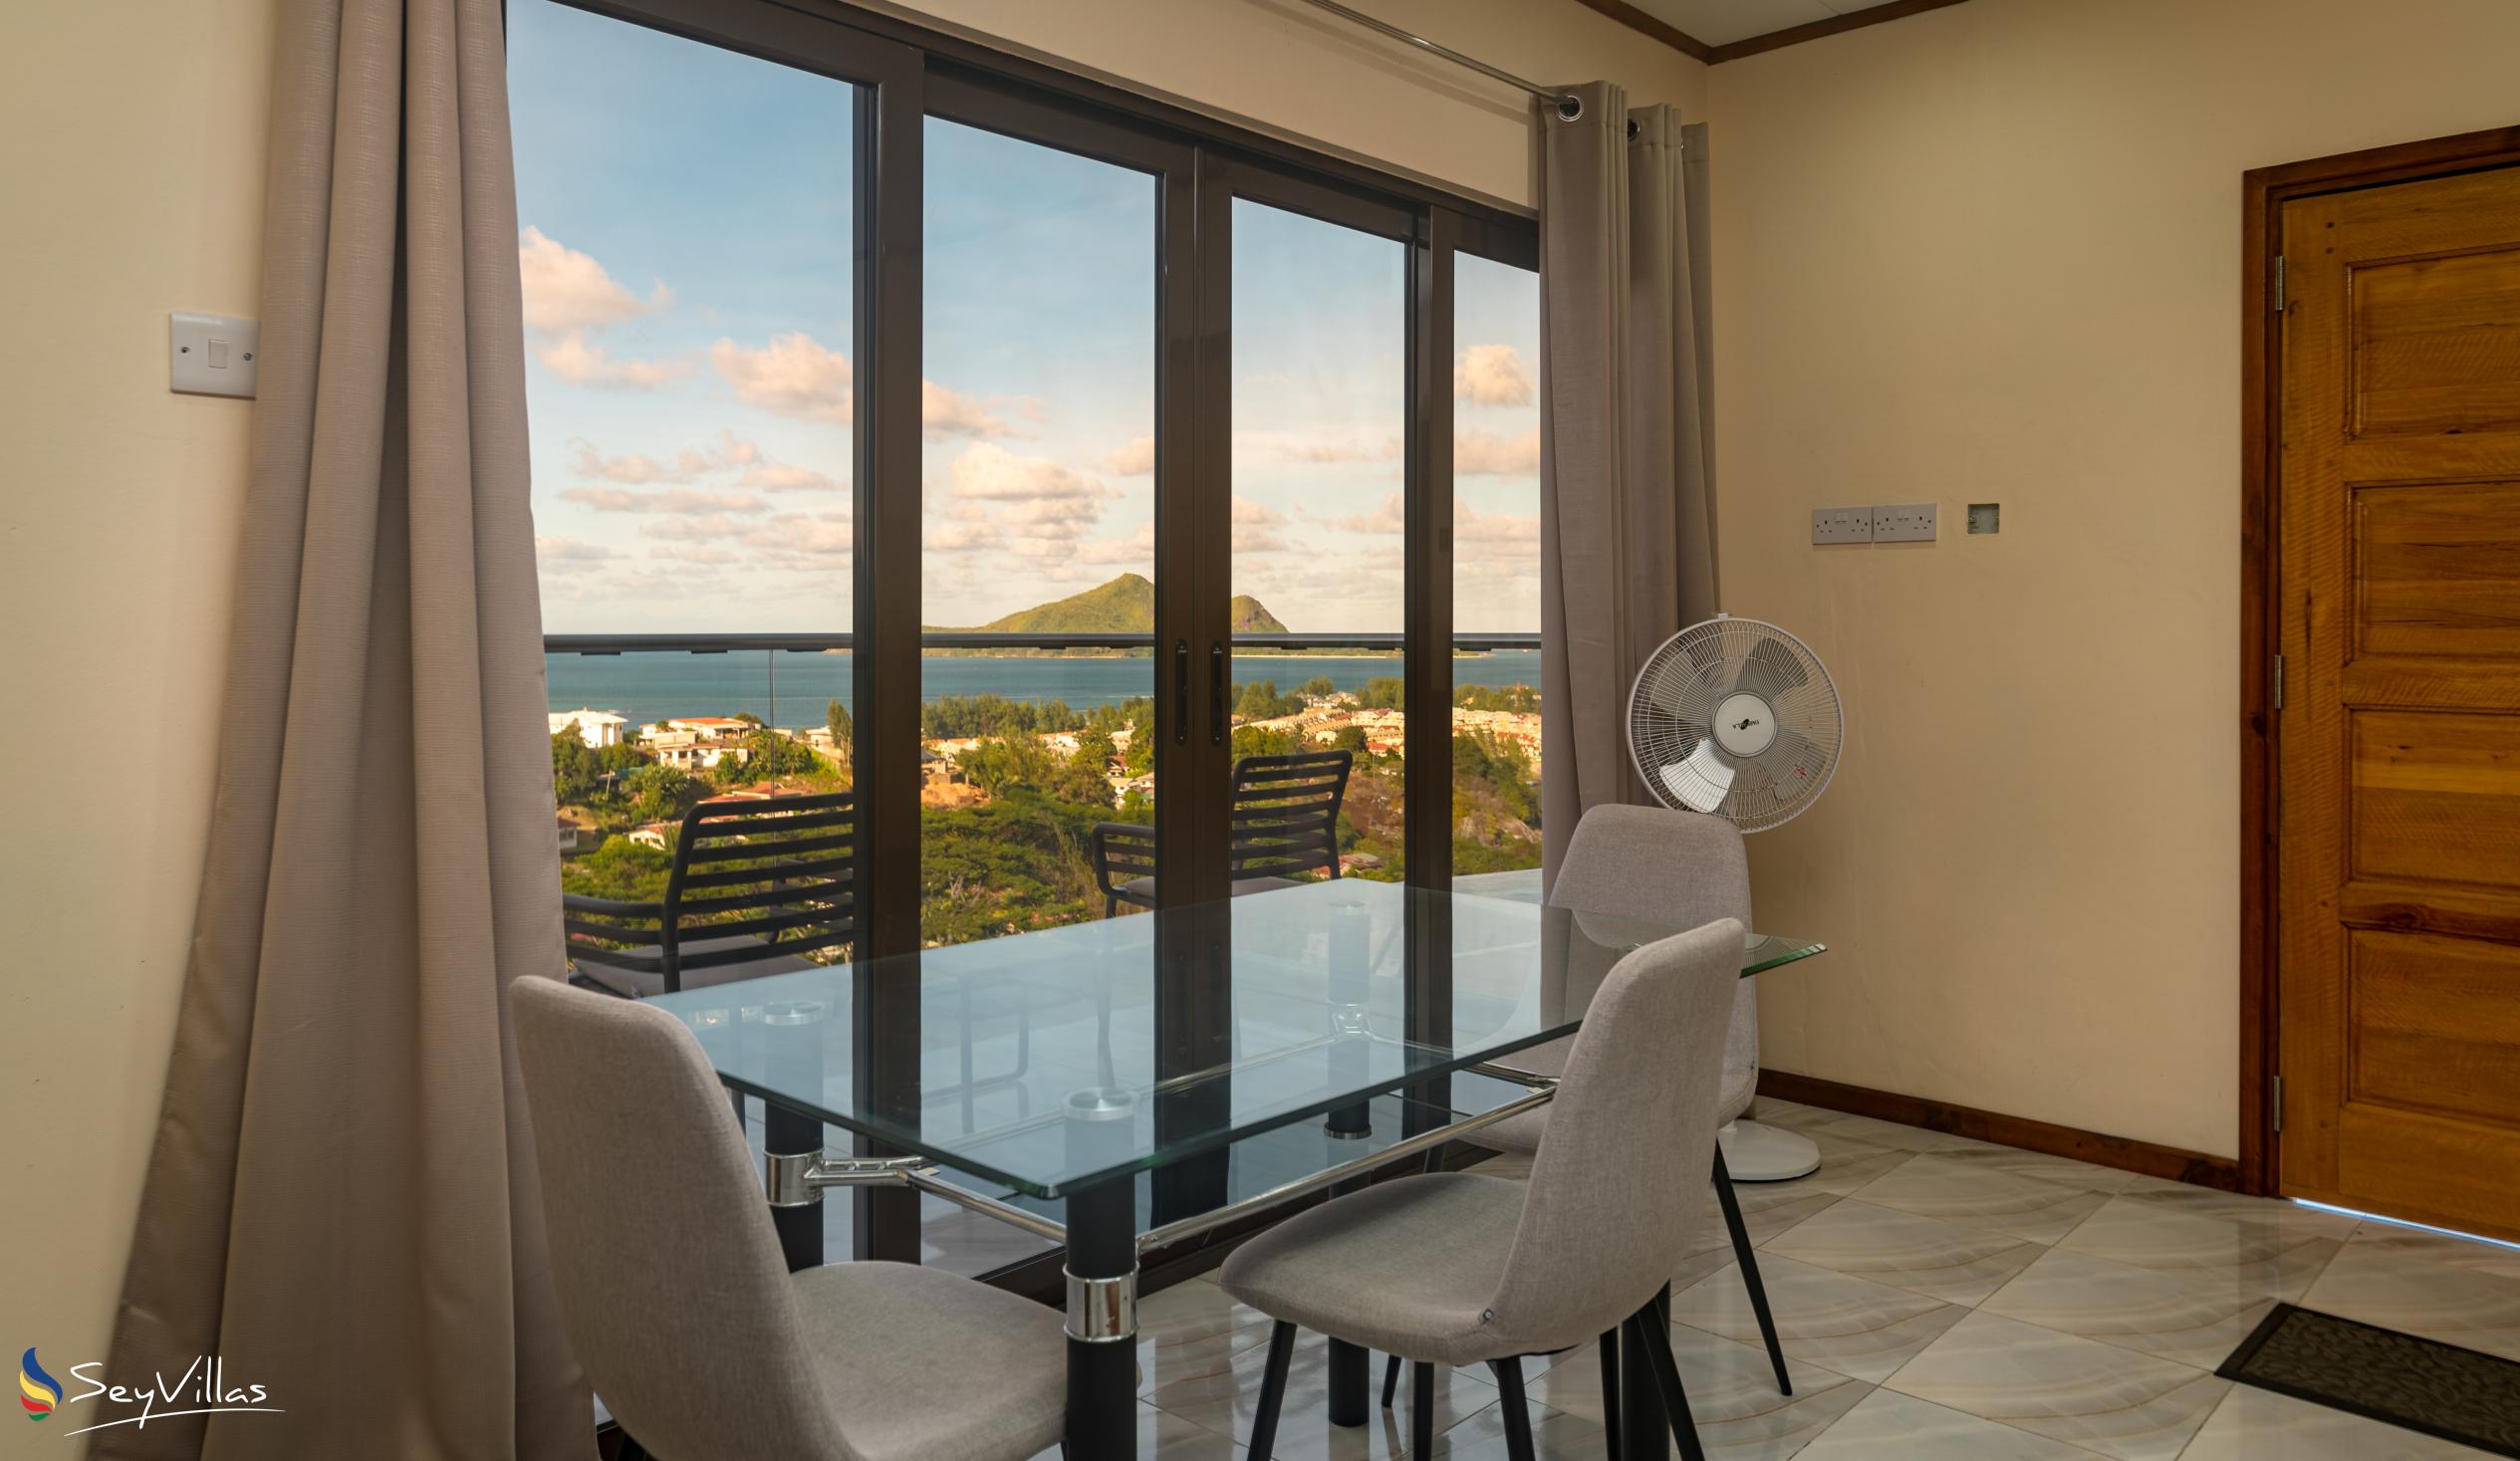 Foto 54: Maison L'Horizon - Appartamento con 1 camera Lalin - Mahé (Seychelles)